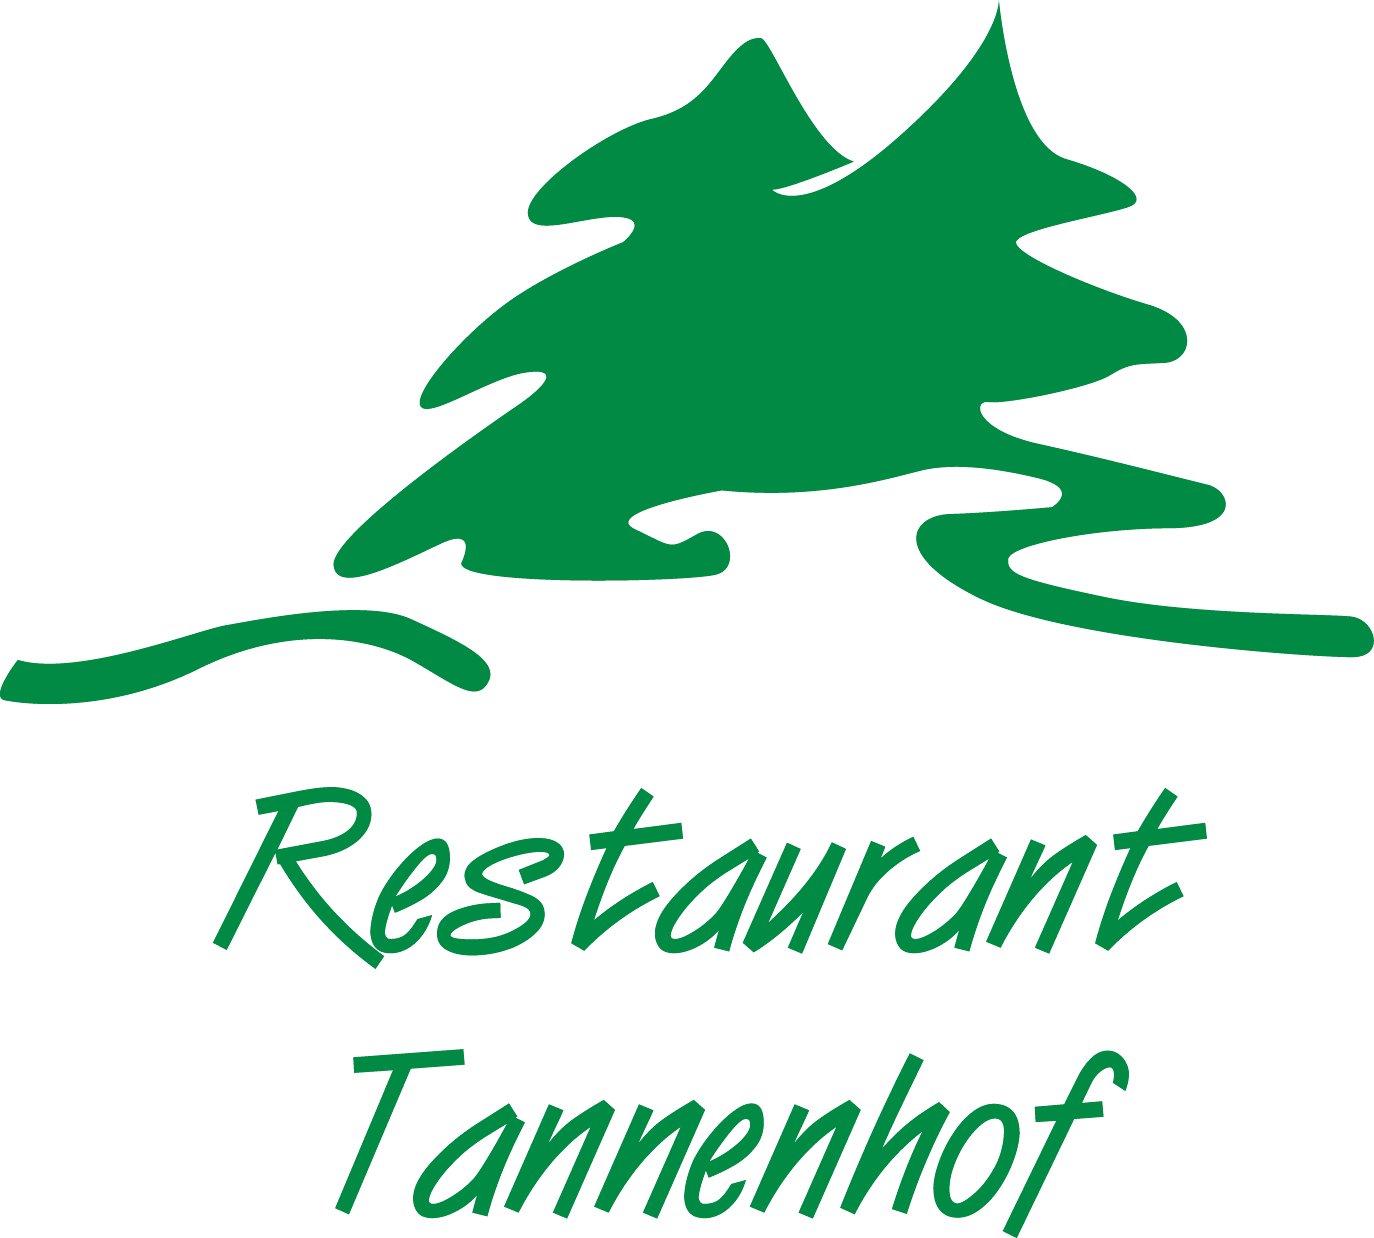 GbR Logo Tannenhof